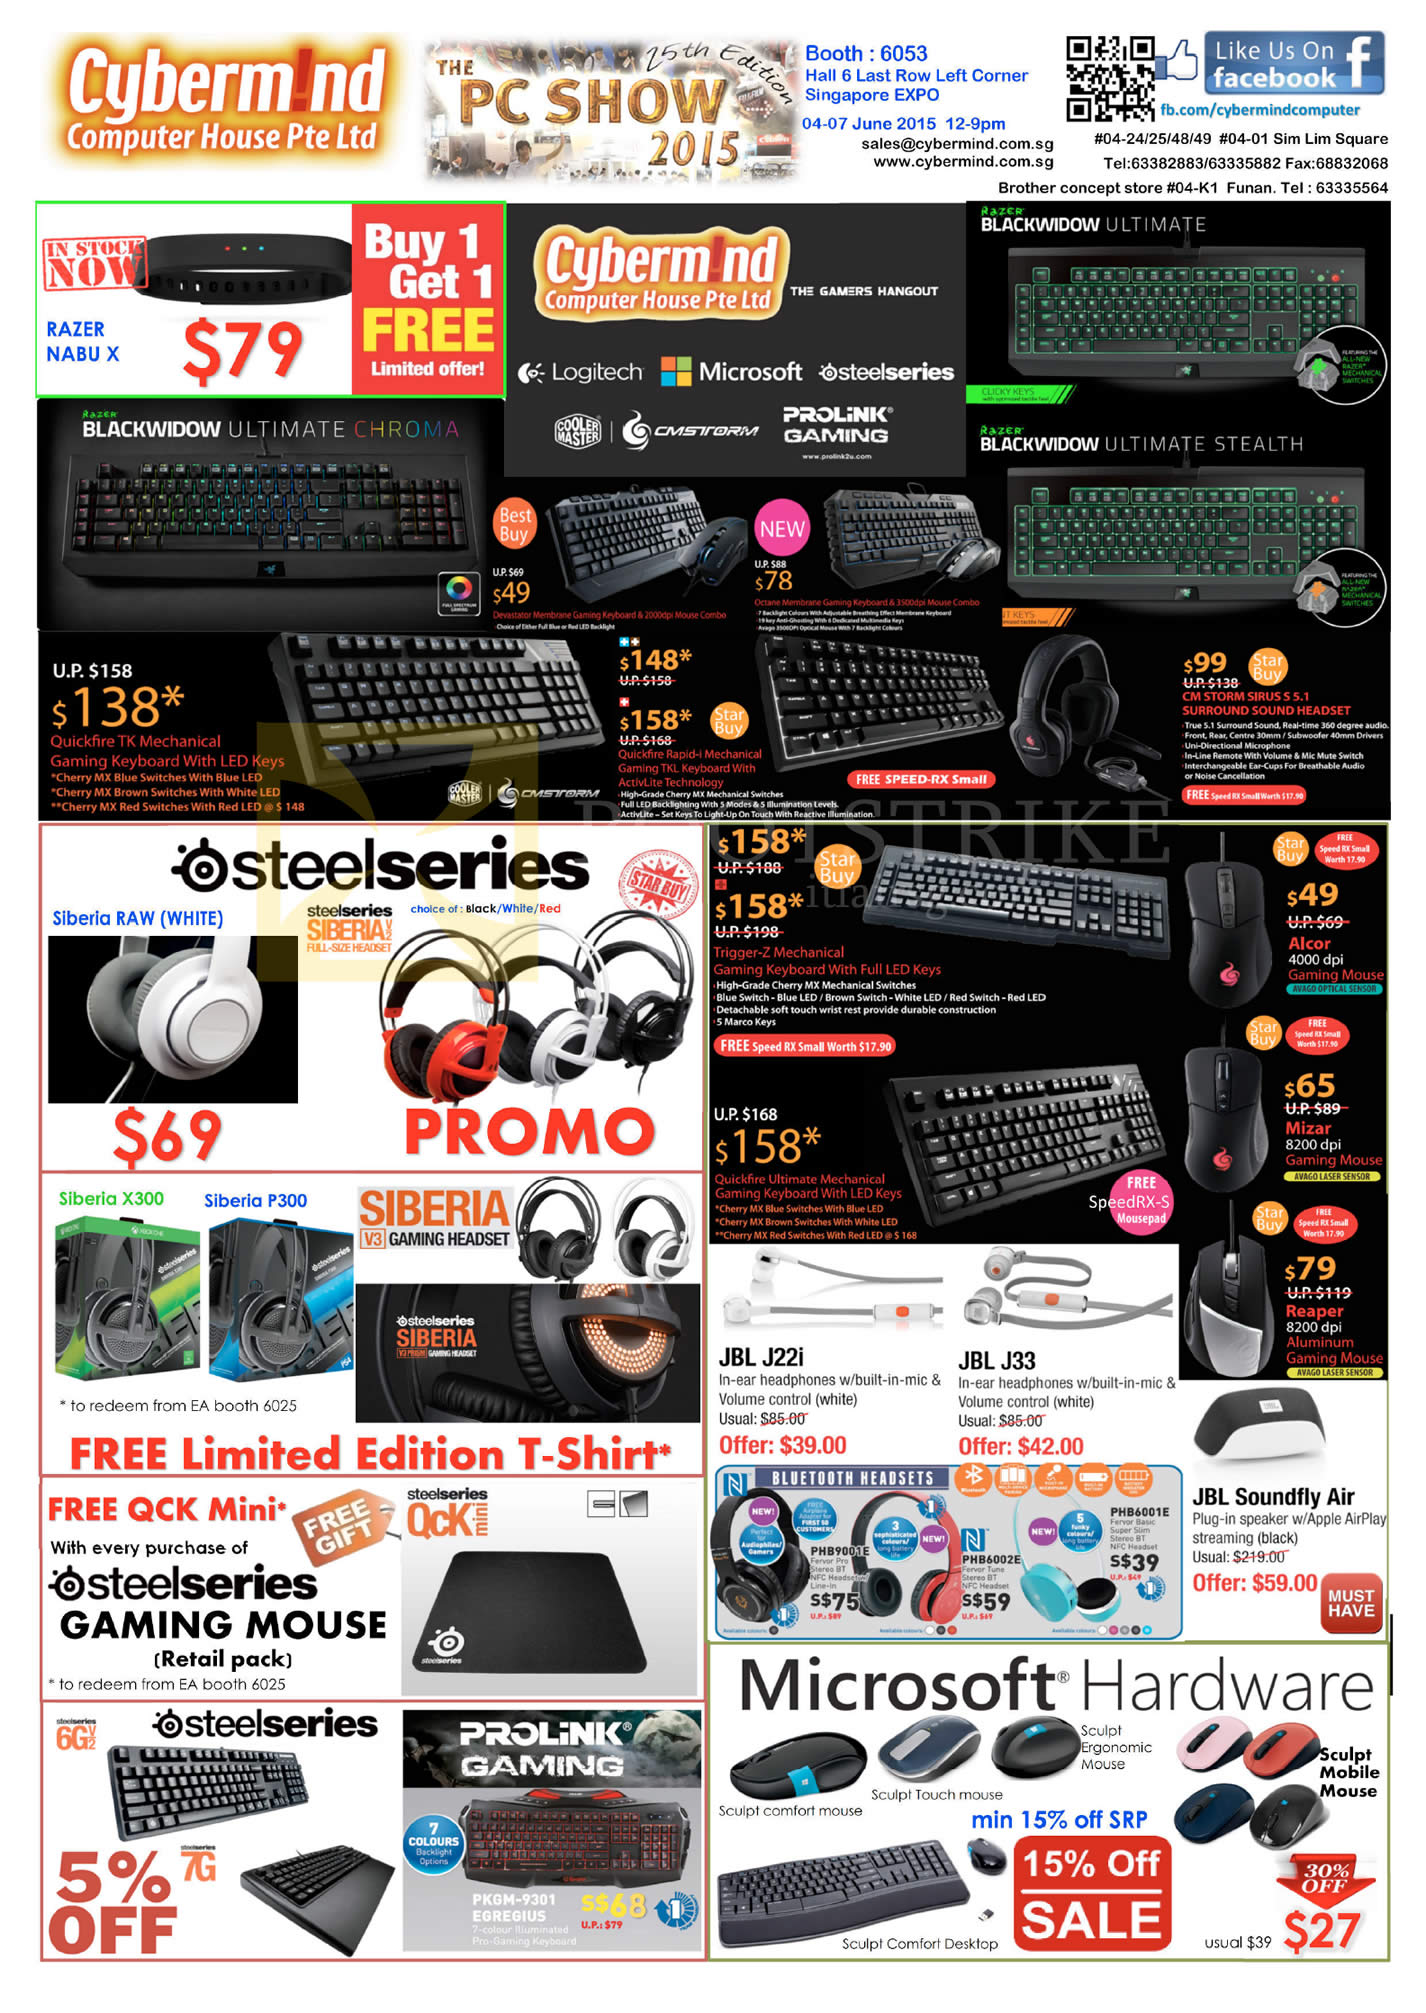 PC SHOW 2015 price list image brochure of Cybermind Razer Accessories, Steelseries, Siberia, JBL, Cooler Master CMStorm, Microsoft